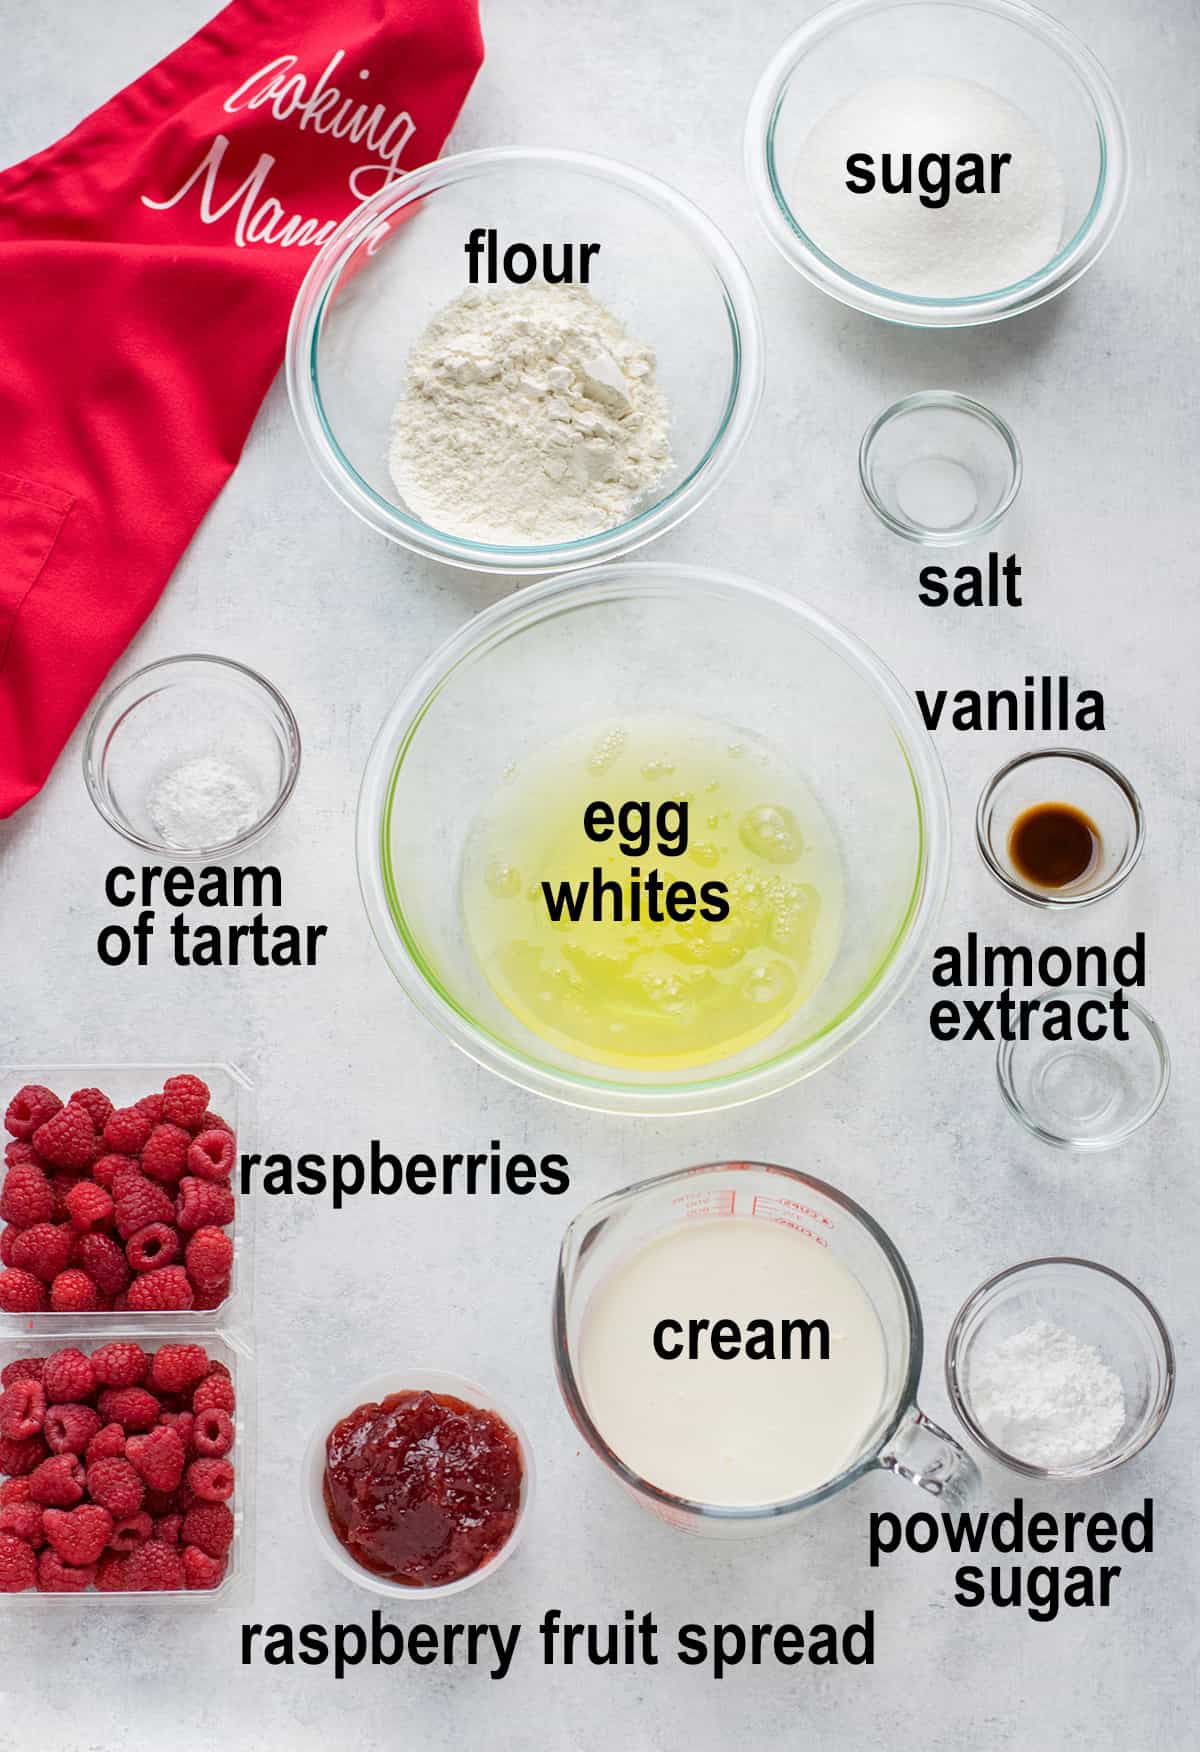 flour, sugar, egg whites, raspberries, cream and cake ingredients